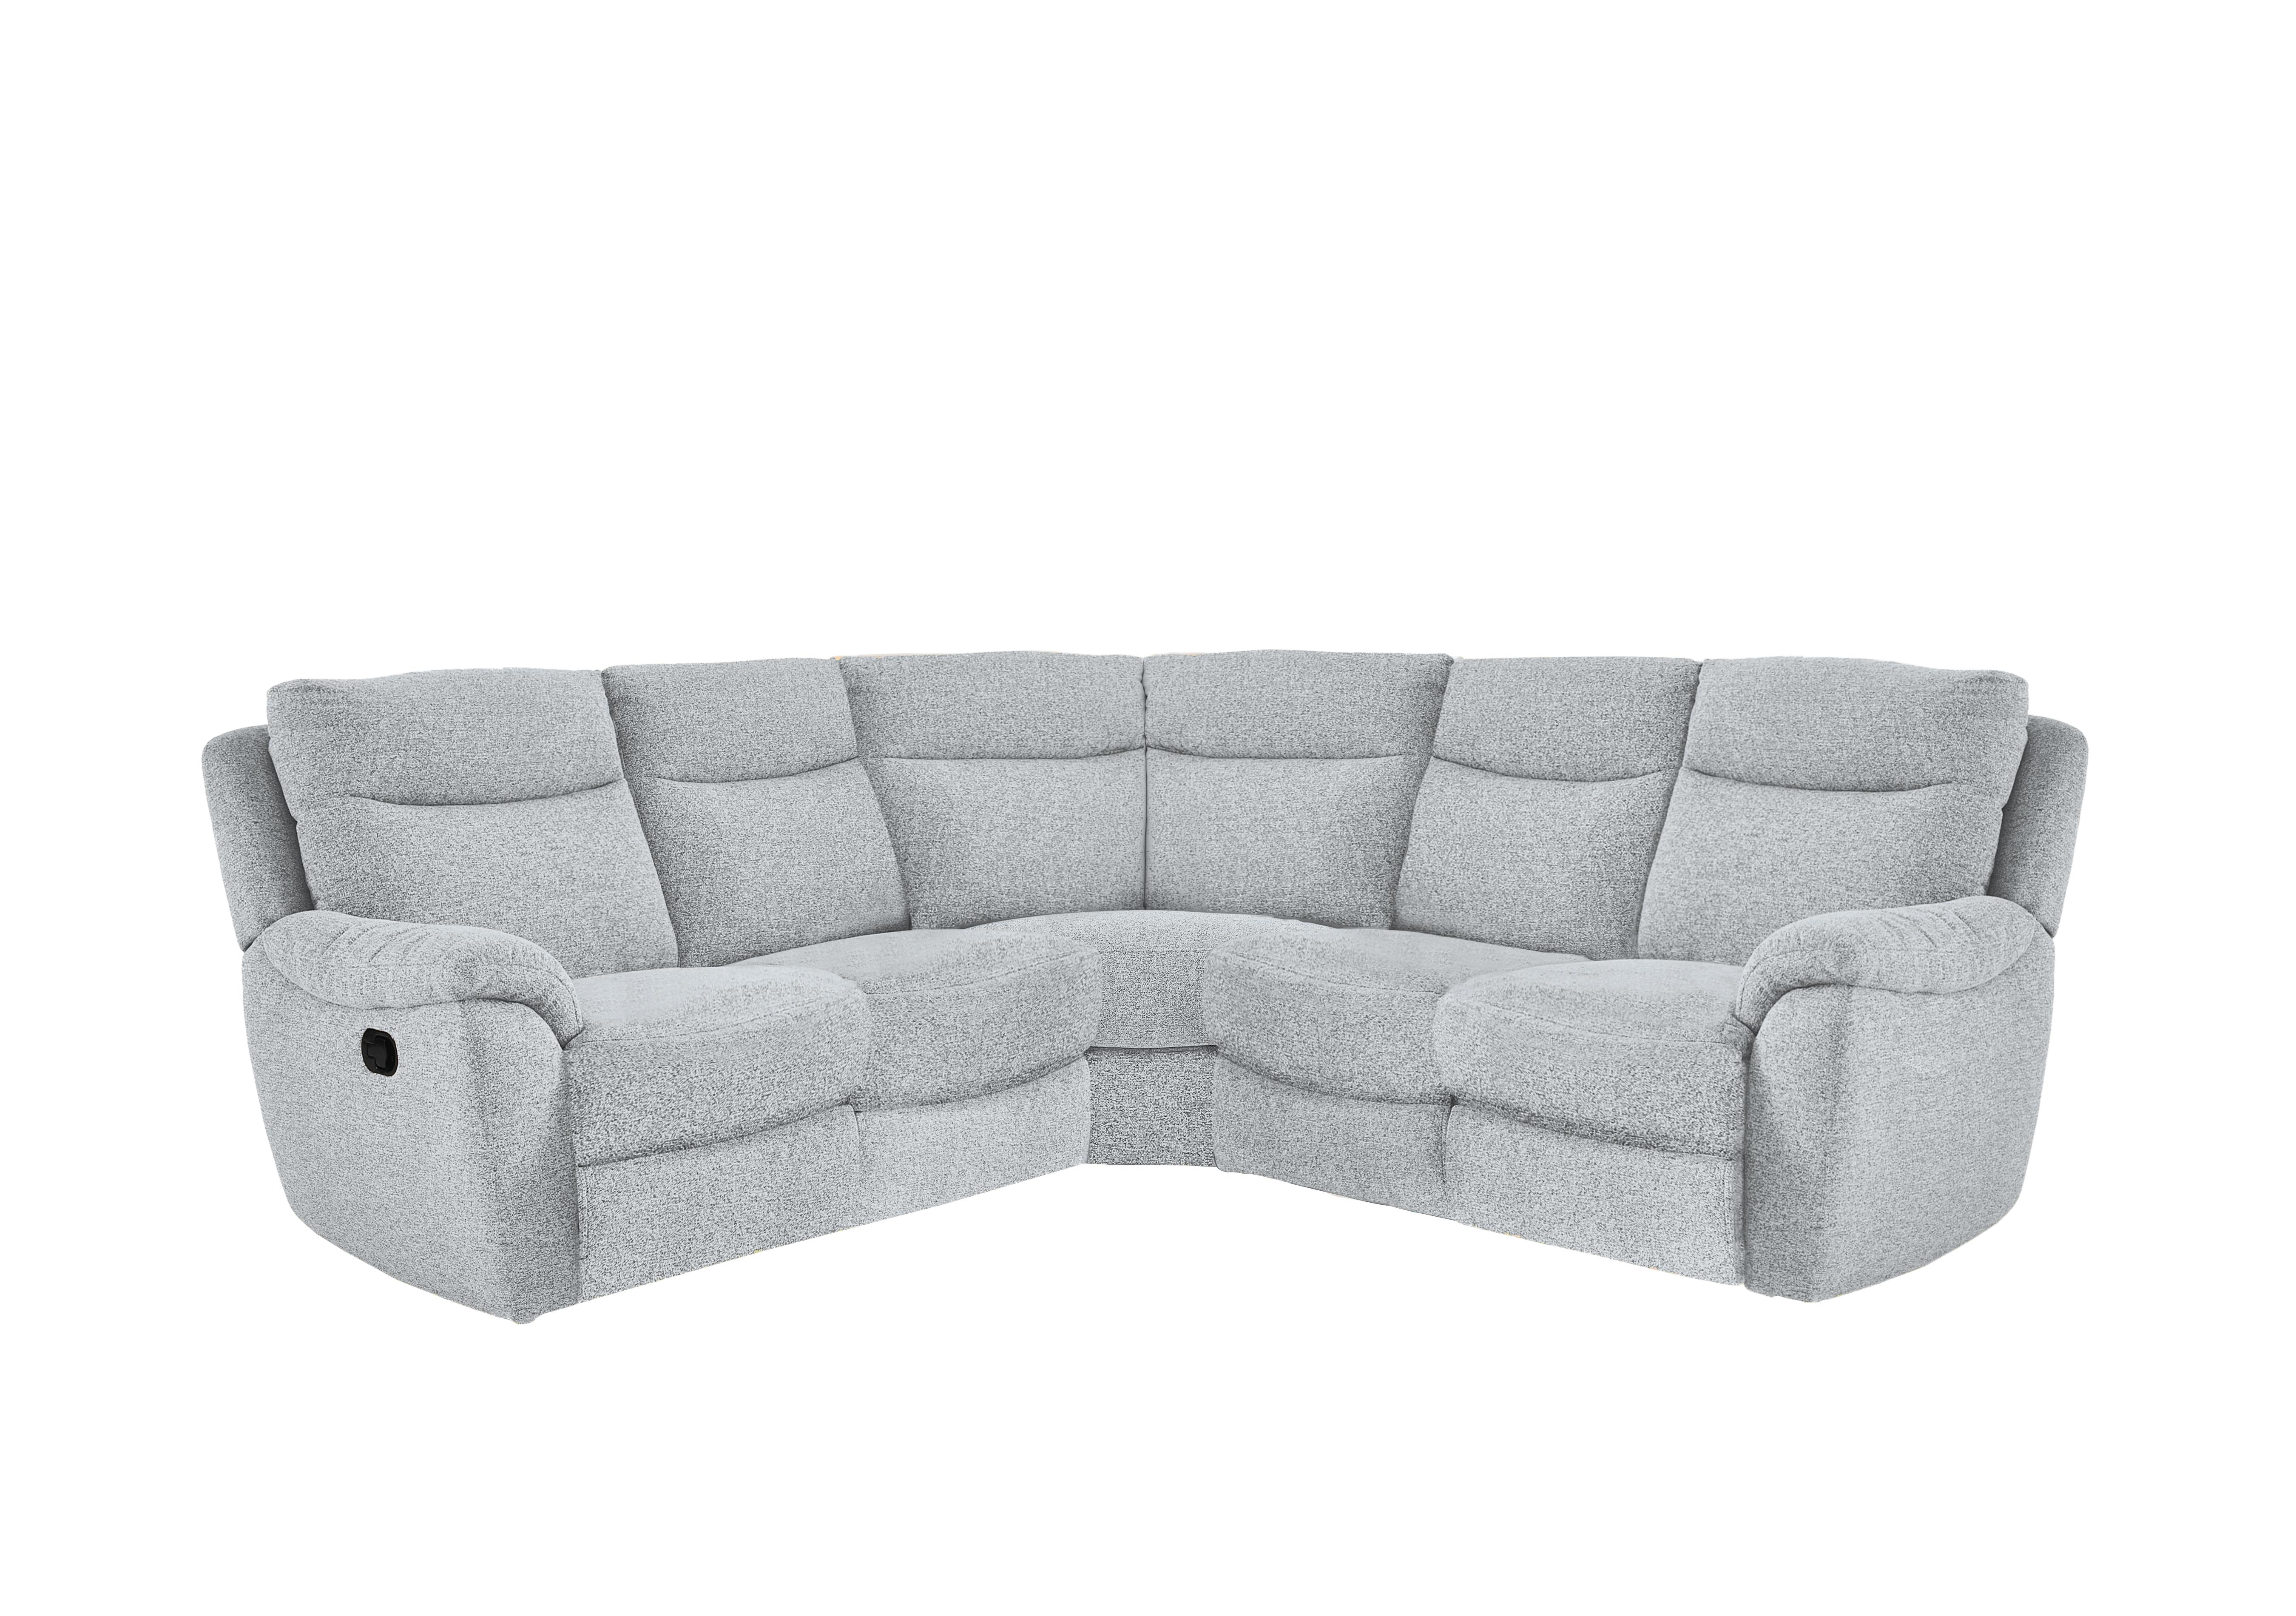 Snug Fabric Corner Sofa in Fab-Chl-R21 Frost on Furniture Village